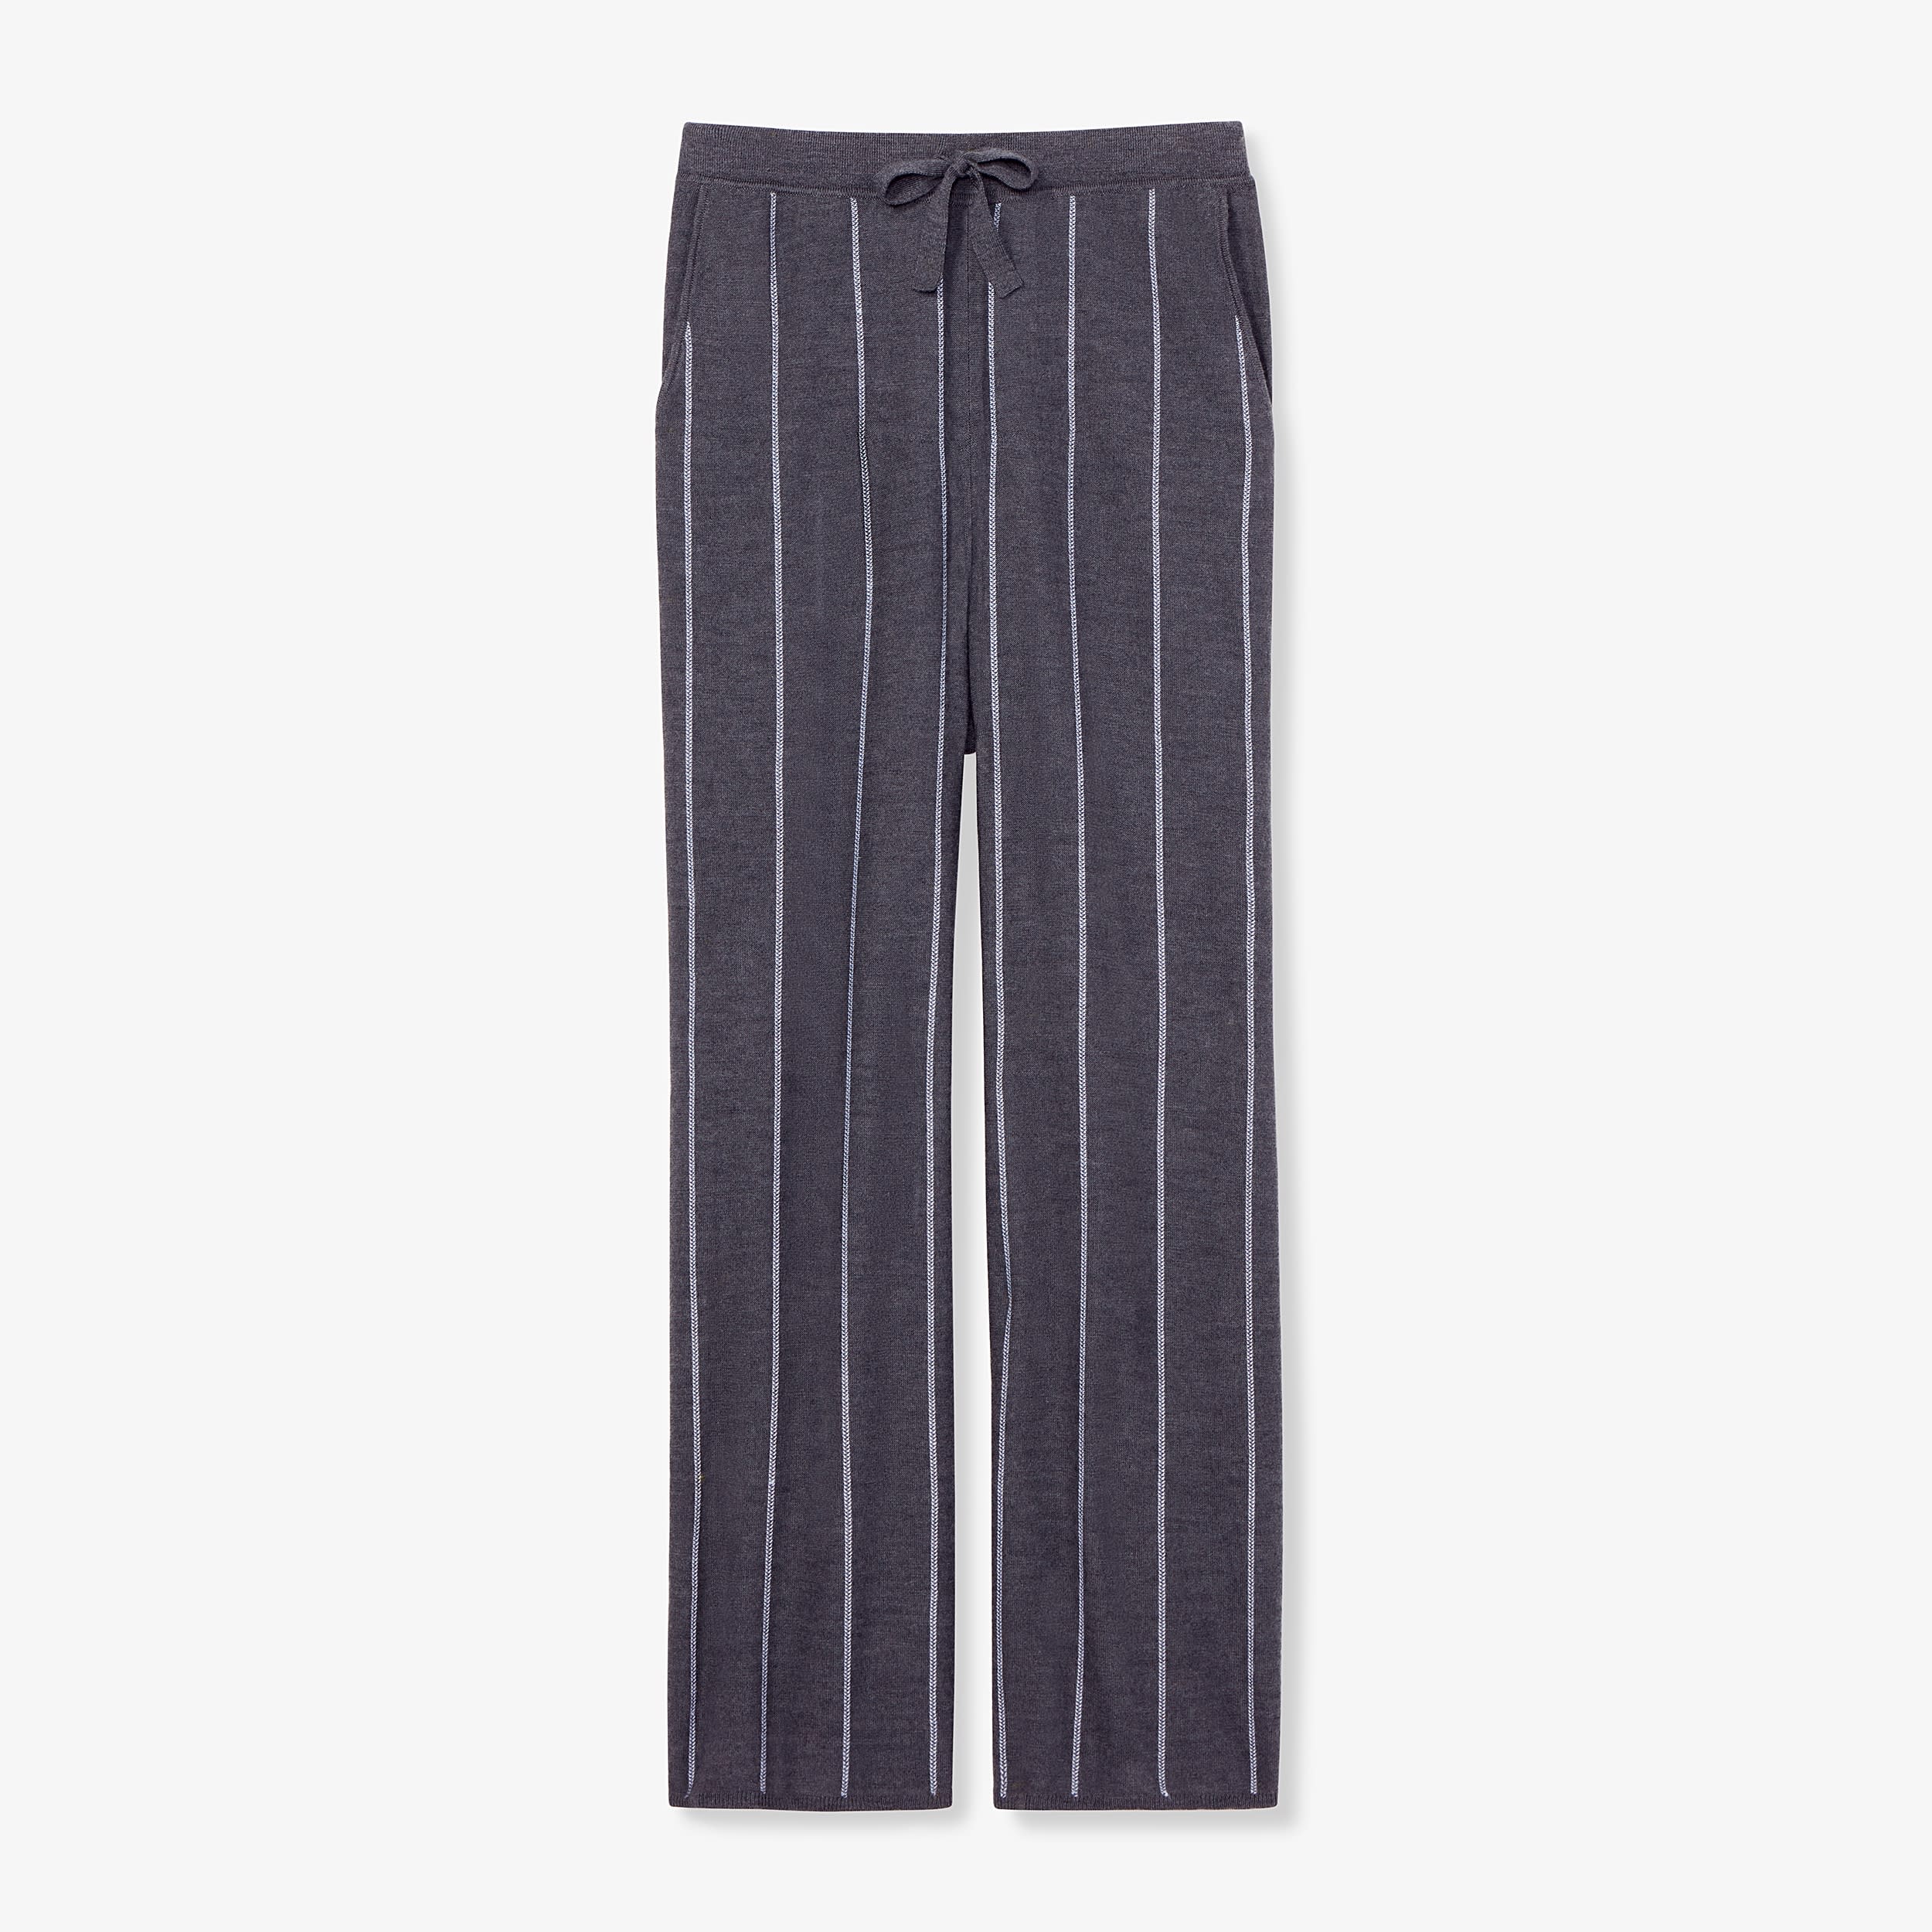 Tressa Pant - Braided Stripe :: Charcoal / Ivory – M.M.LaFleur